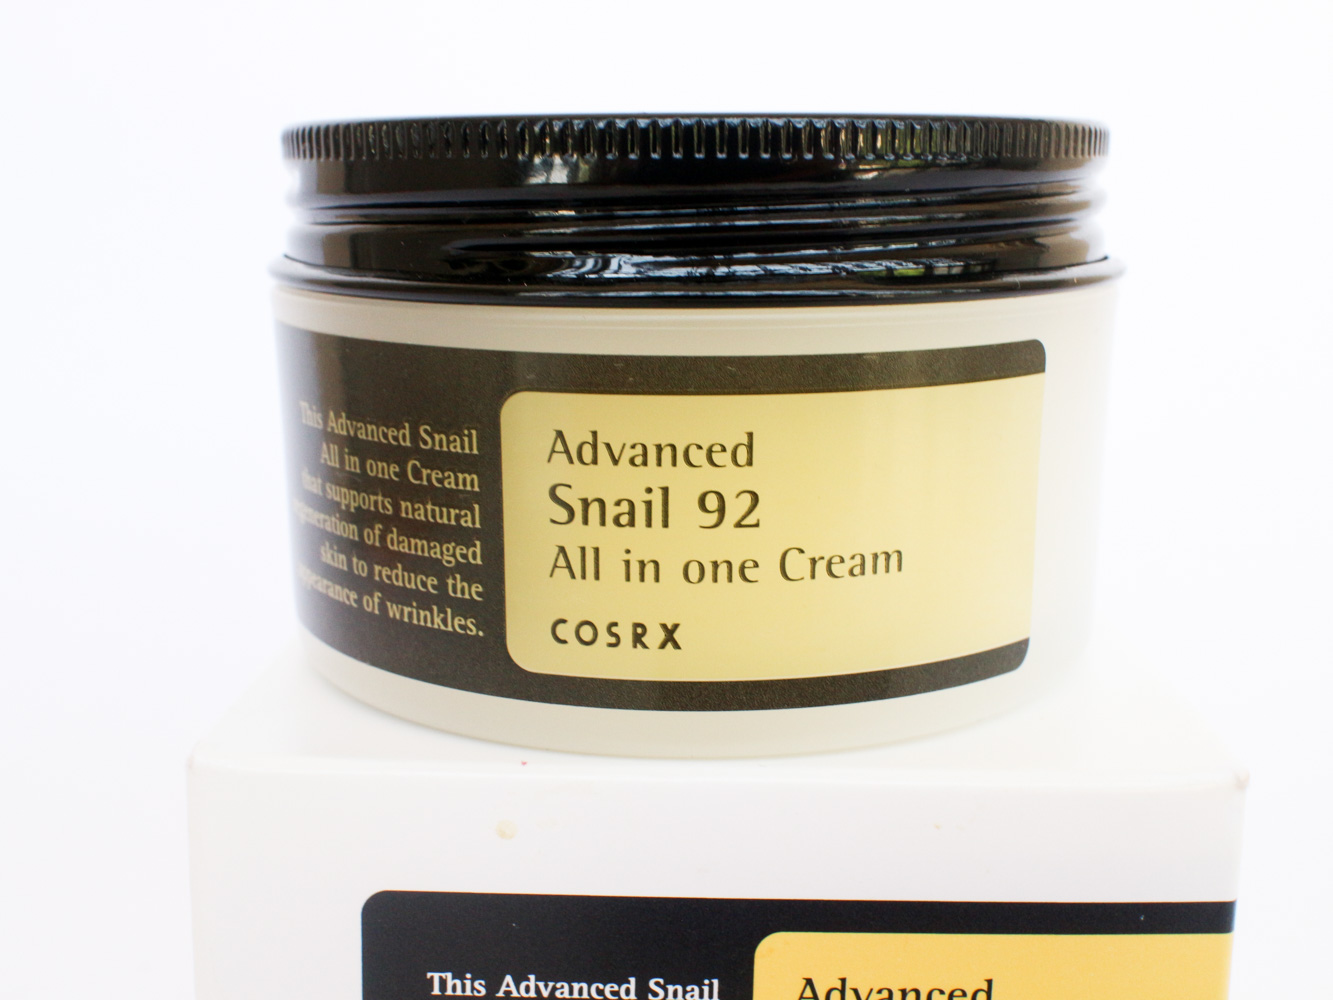 Cosrx advanced snail 92 all in one cream